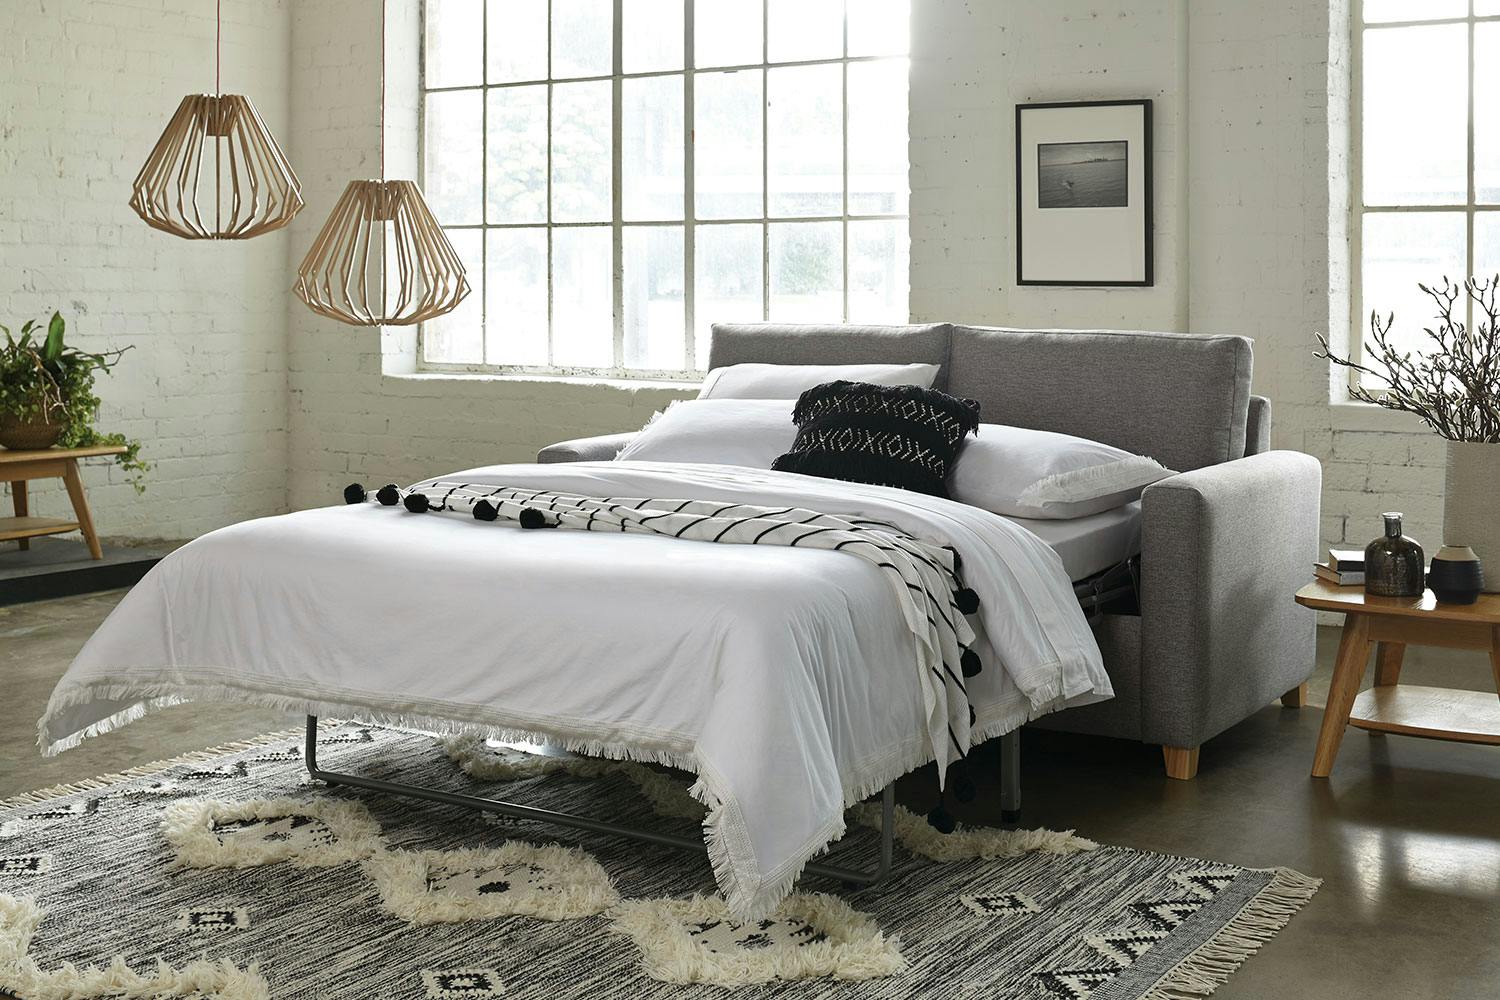 Taylor Fabric Sofa Bed